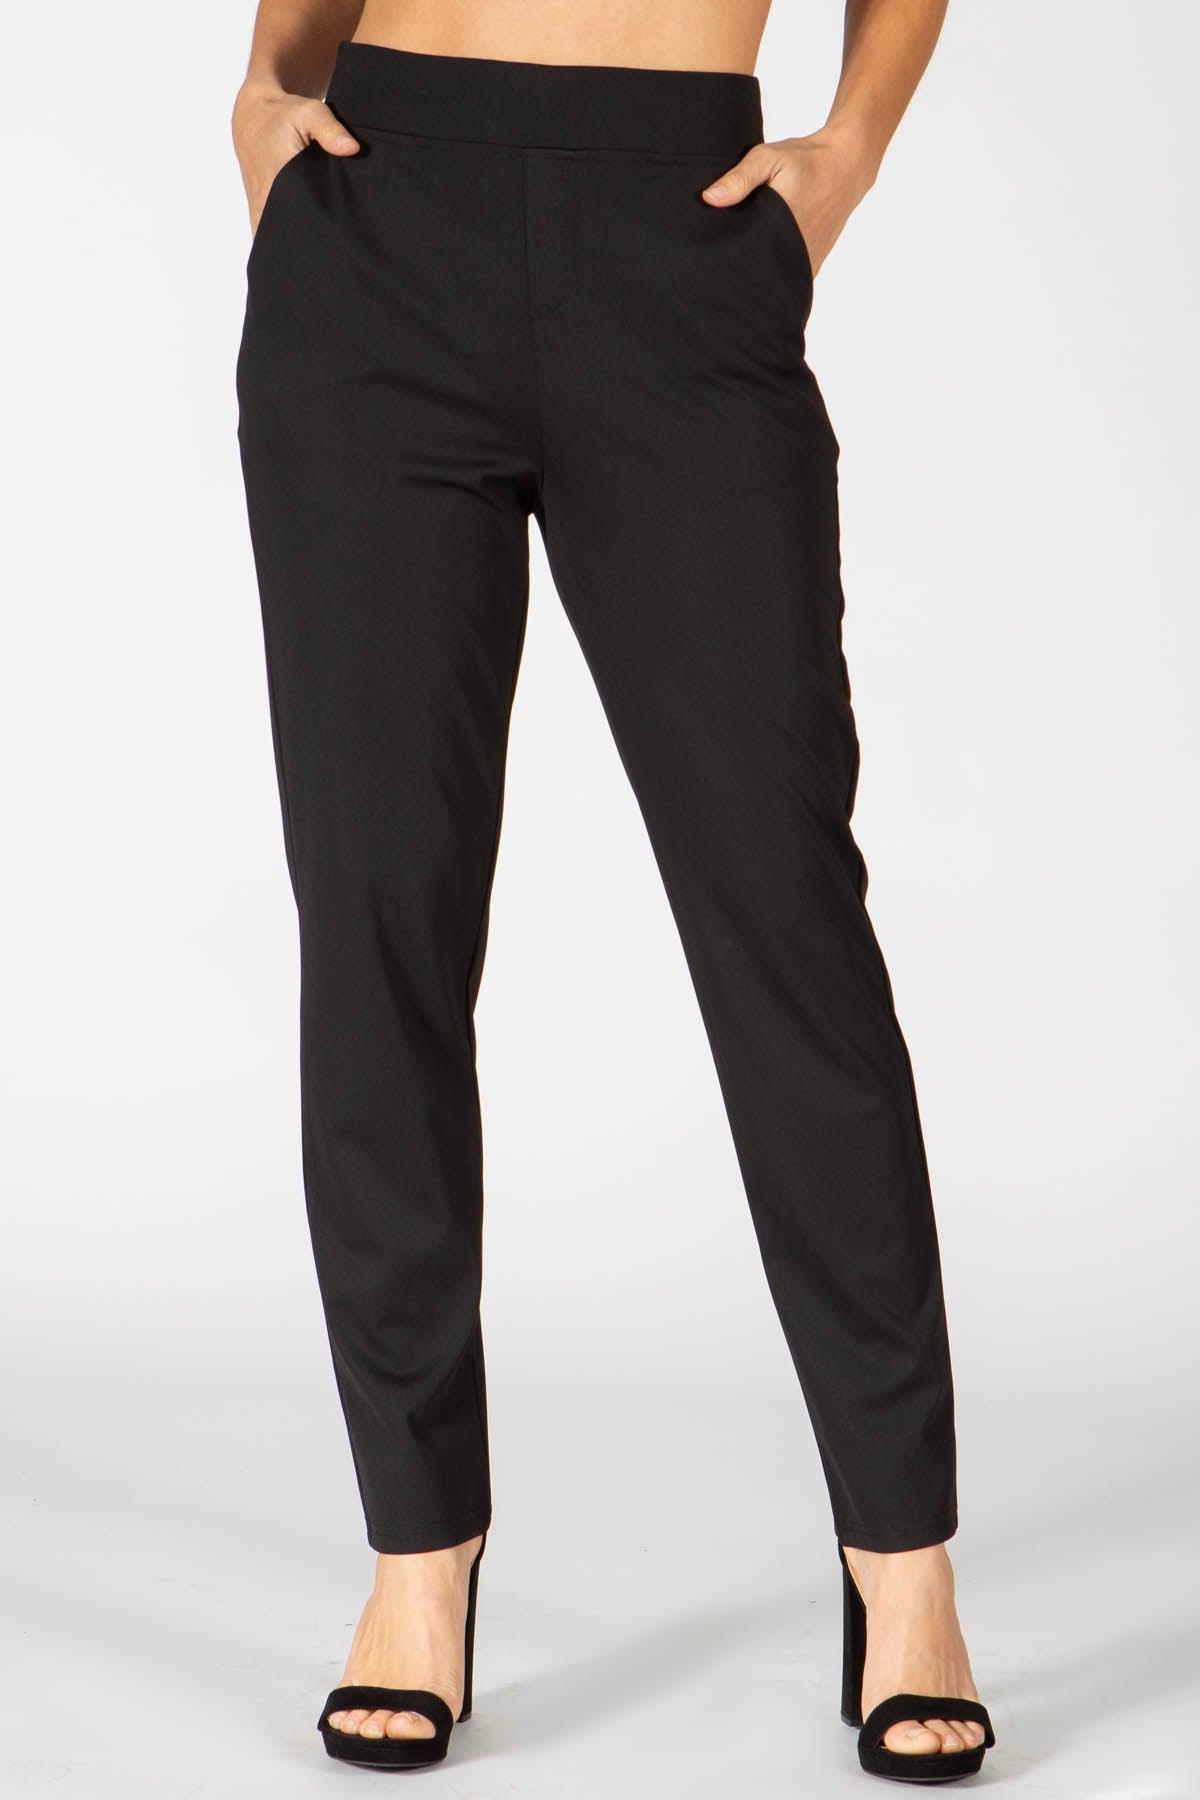 High Waist Lightweight Ponte Pull On Pants With Pockets - Black - SHOSHO Fashion